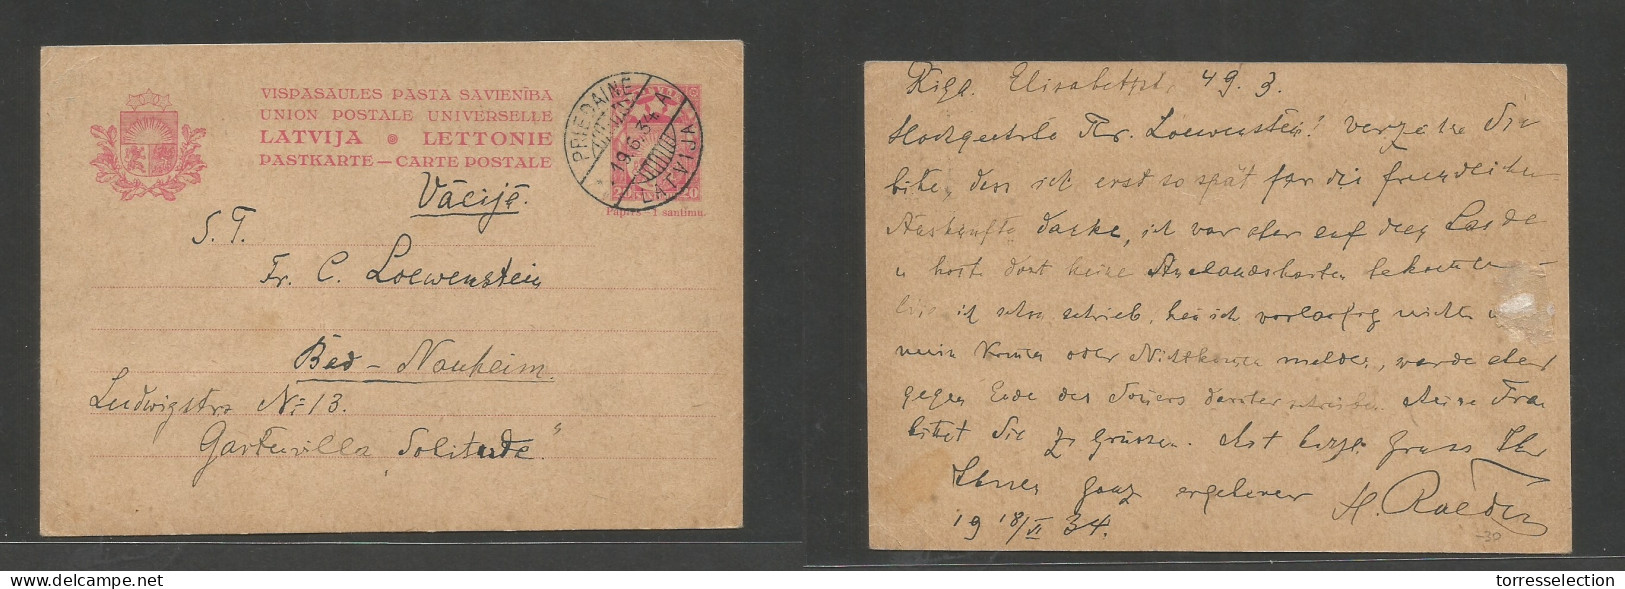 LATVIA. 1934 (19 June) Priedaine - Bed Nouheim. 20s Rose Stat Card. VF Used. SALE. - Latvia